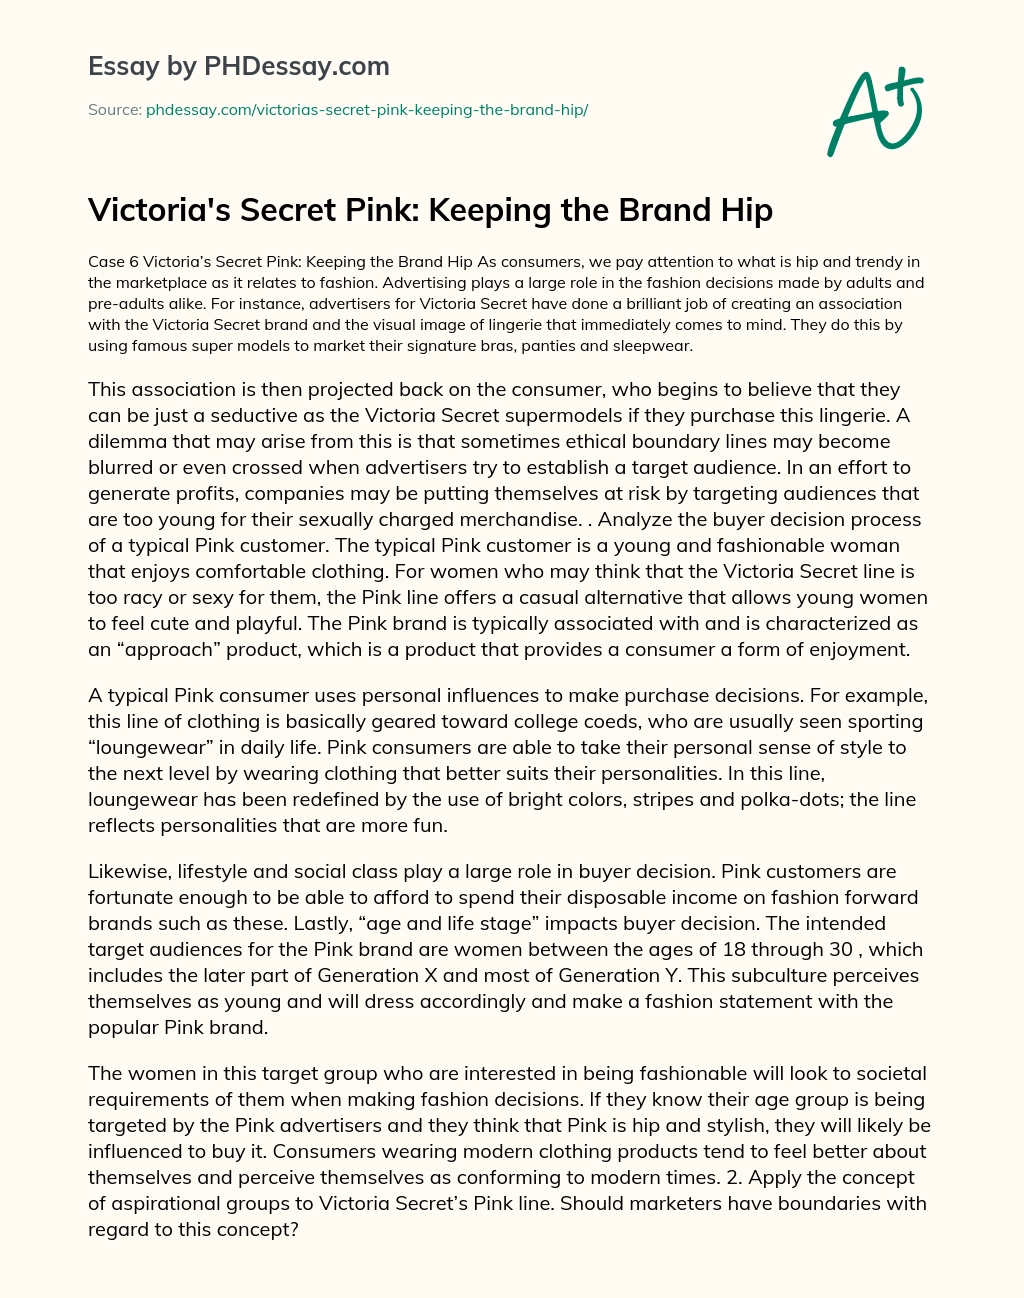 Victoria’s Secret Pink: Keeping the Brand Hip essay